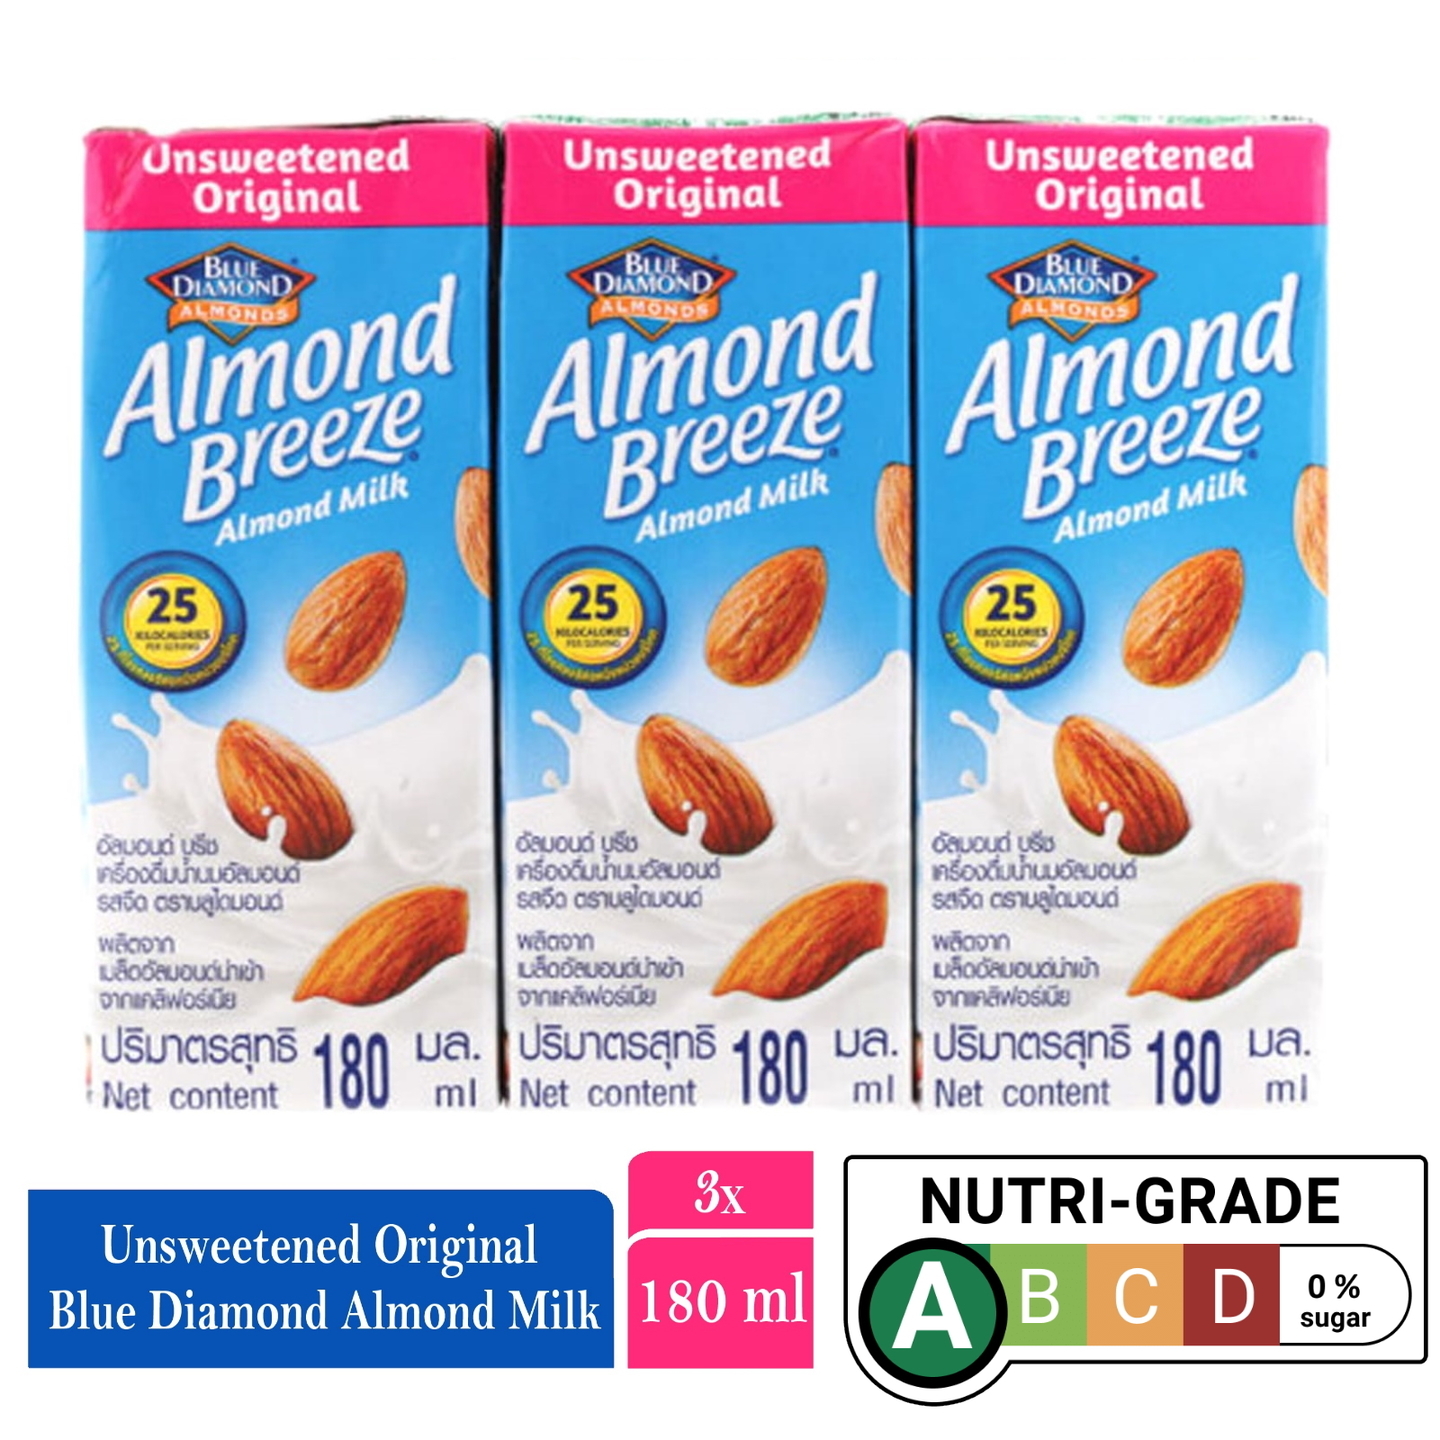 Blue Diamond Unsweetened Original Almond Breeze Almond Milk 3 X 180ml